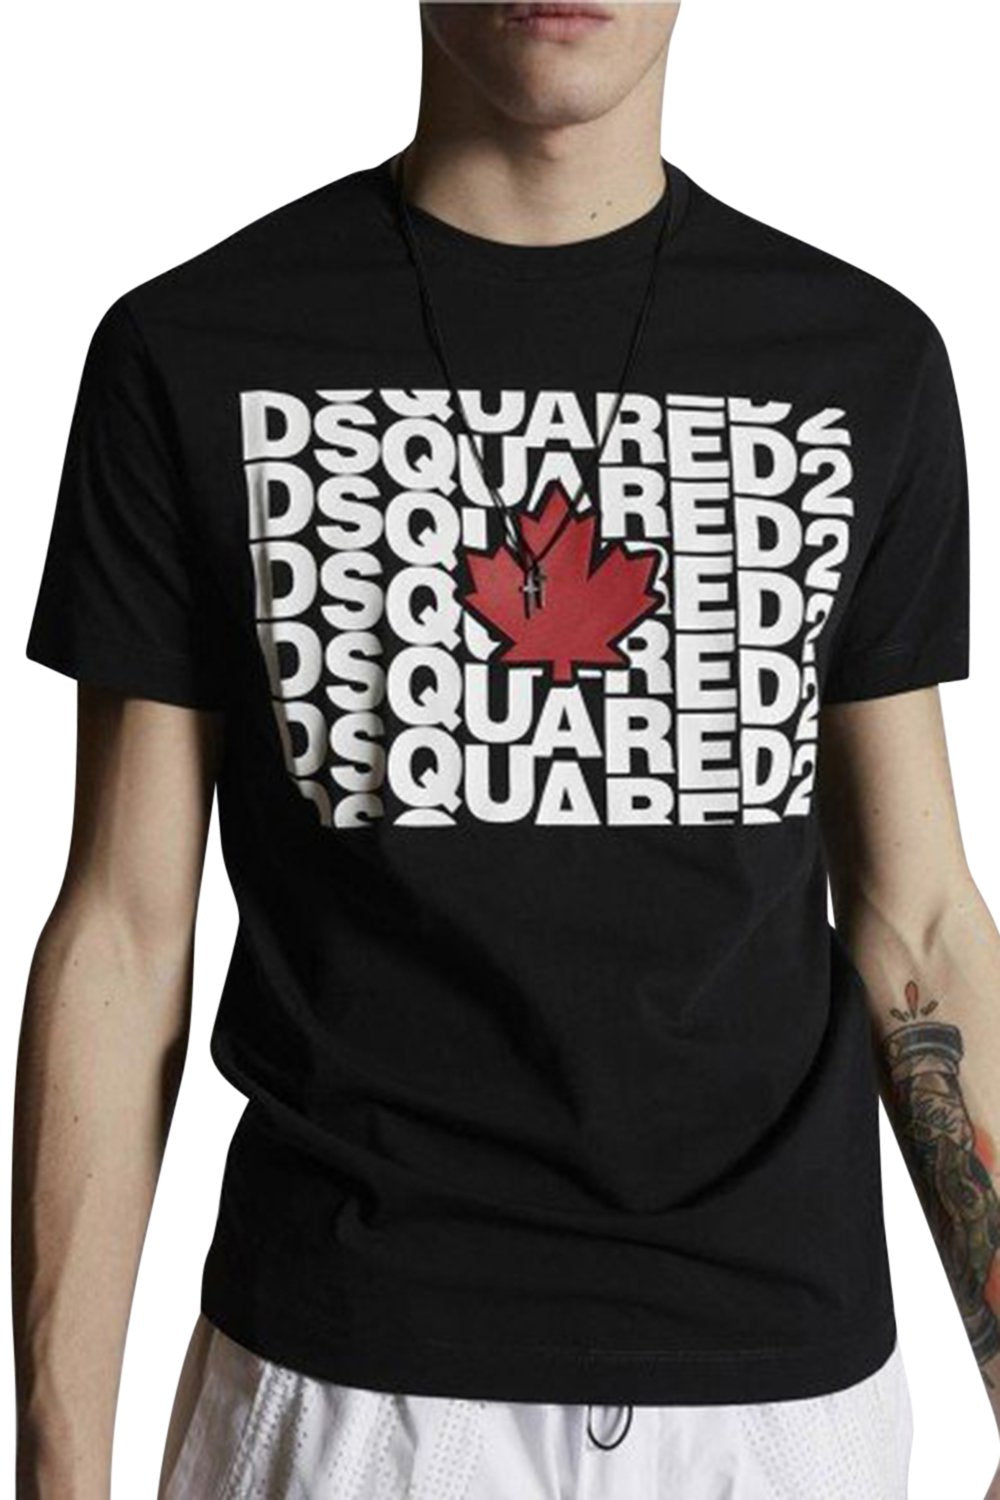 Men's Black DSquared2 Canada Leaf T-Shirt